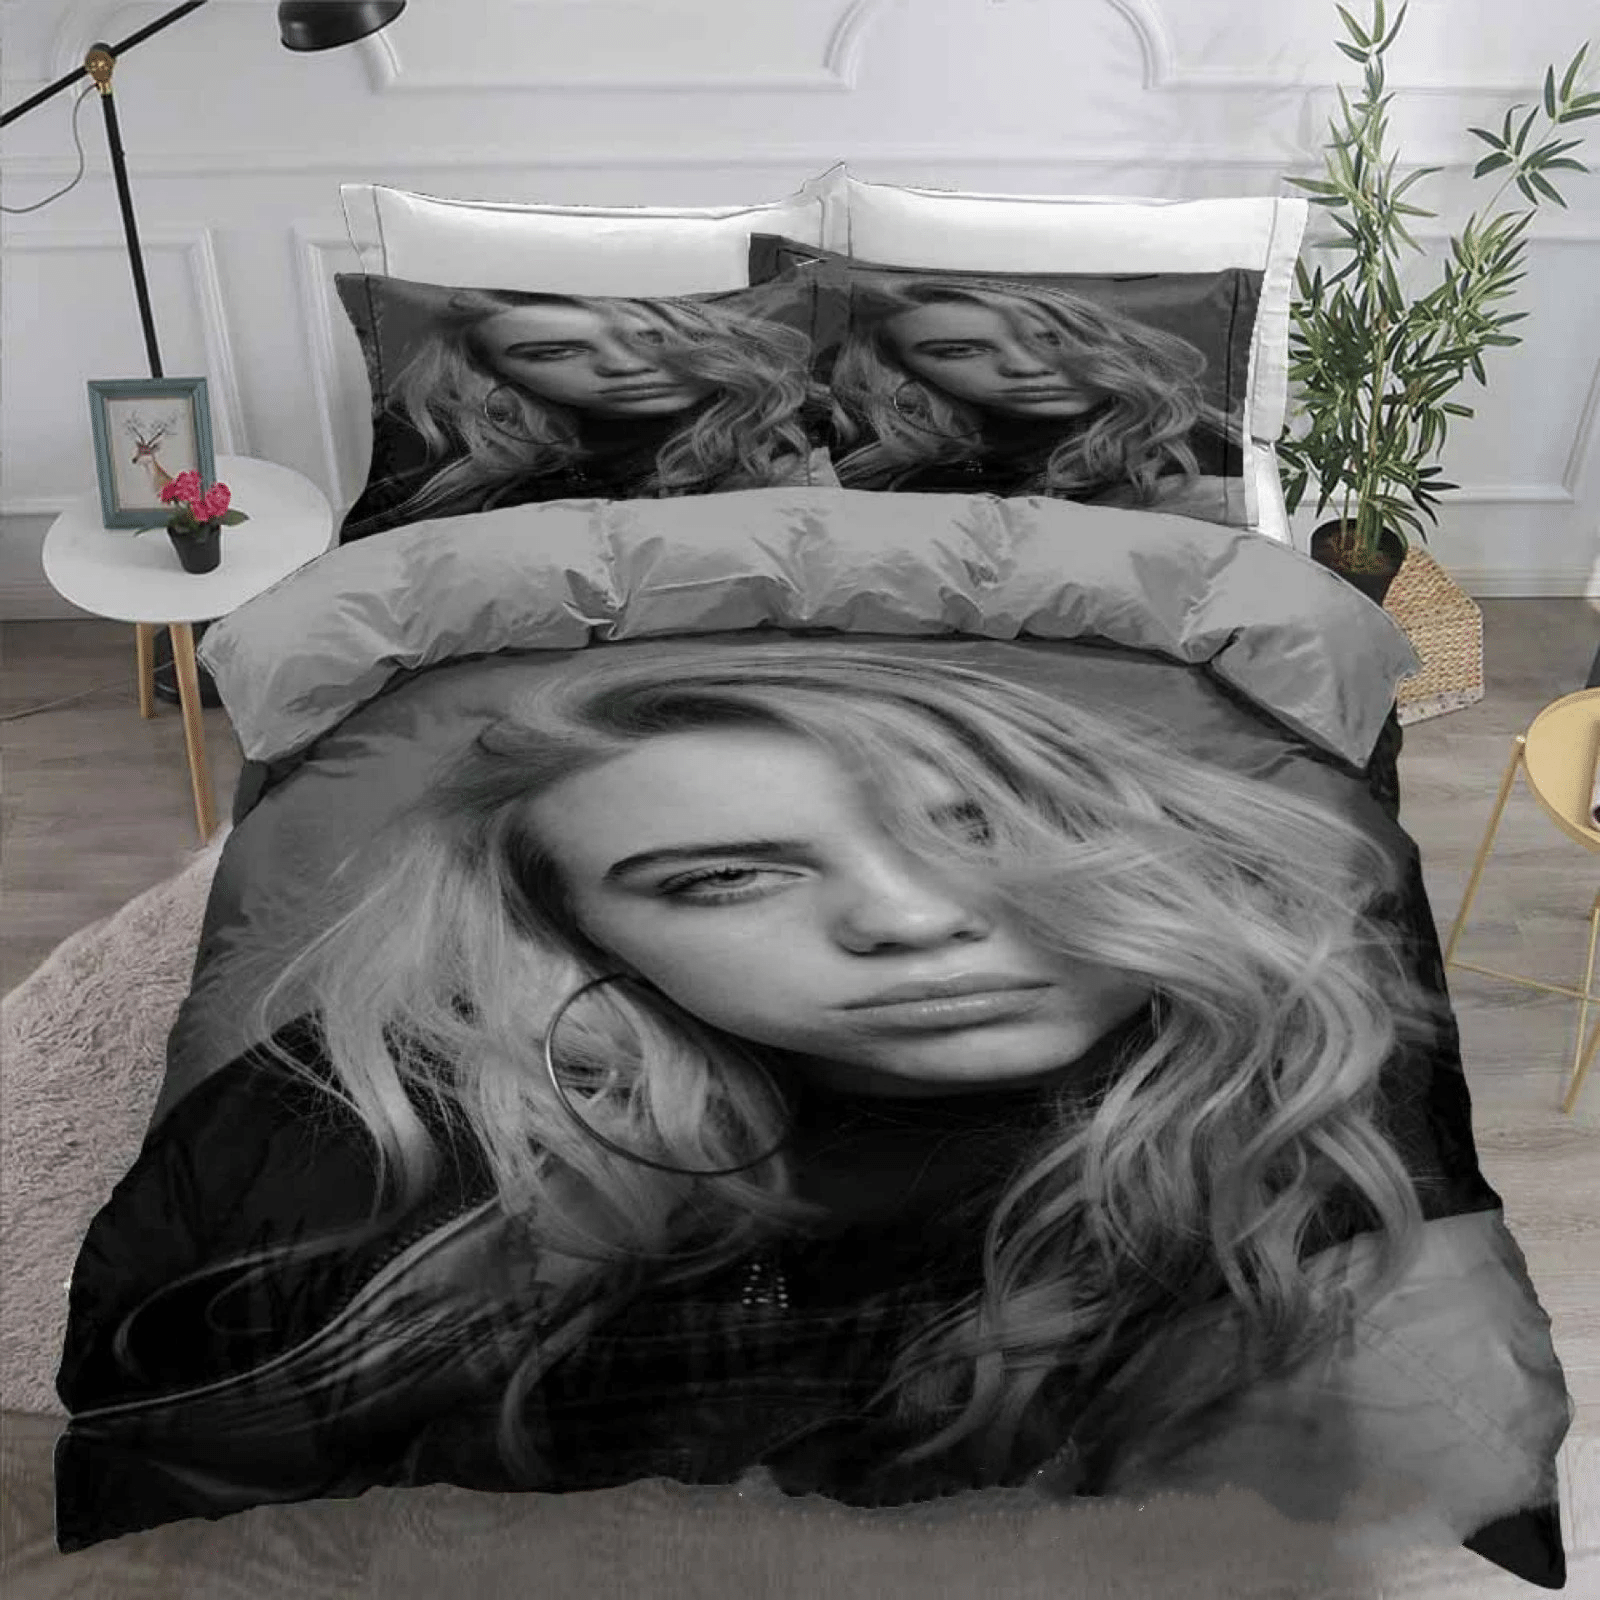 Billie Eilish Bellyache 47 Duvet Cover Pillowcase Bedding Sets Home